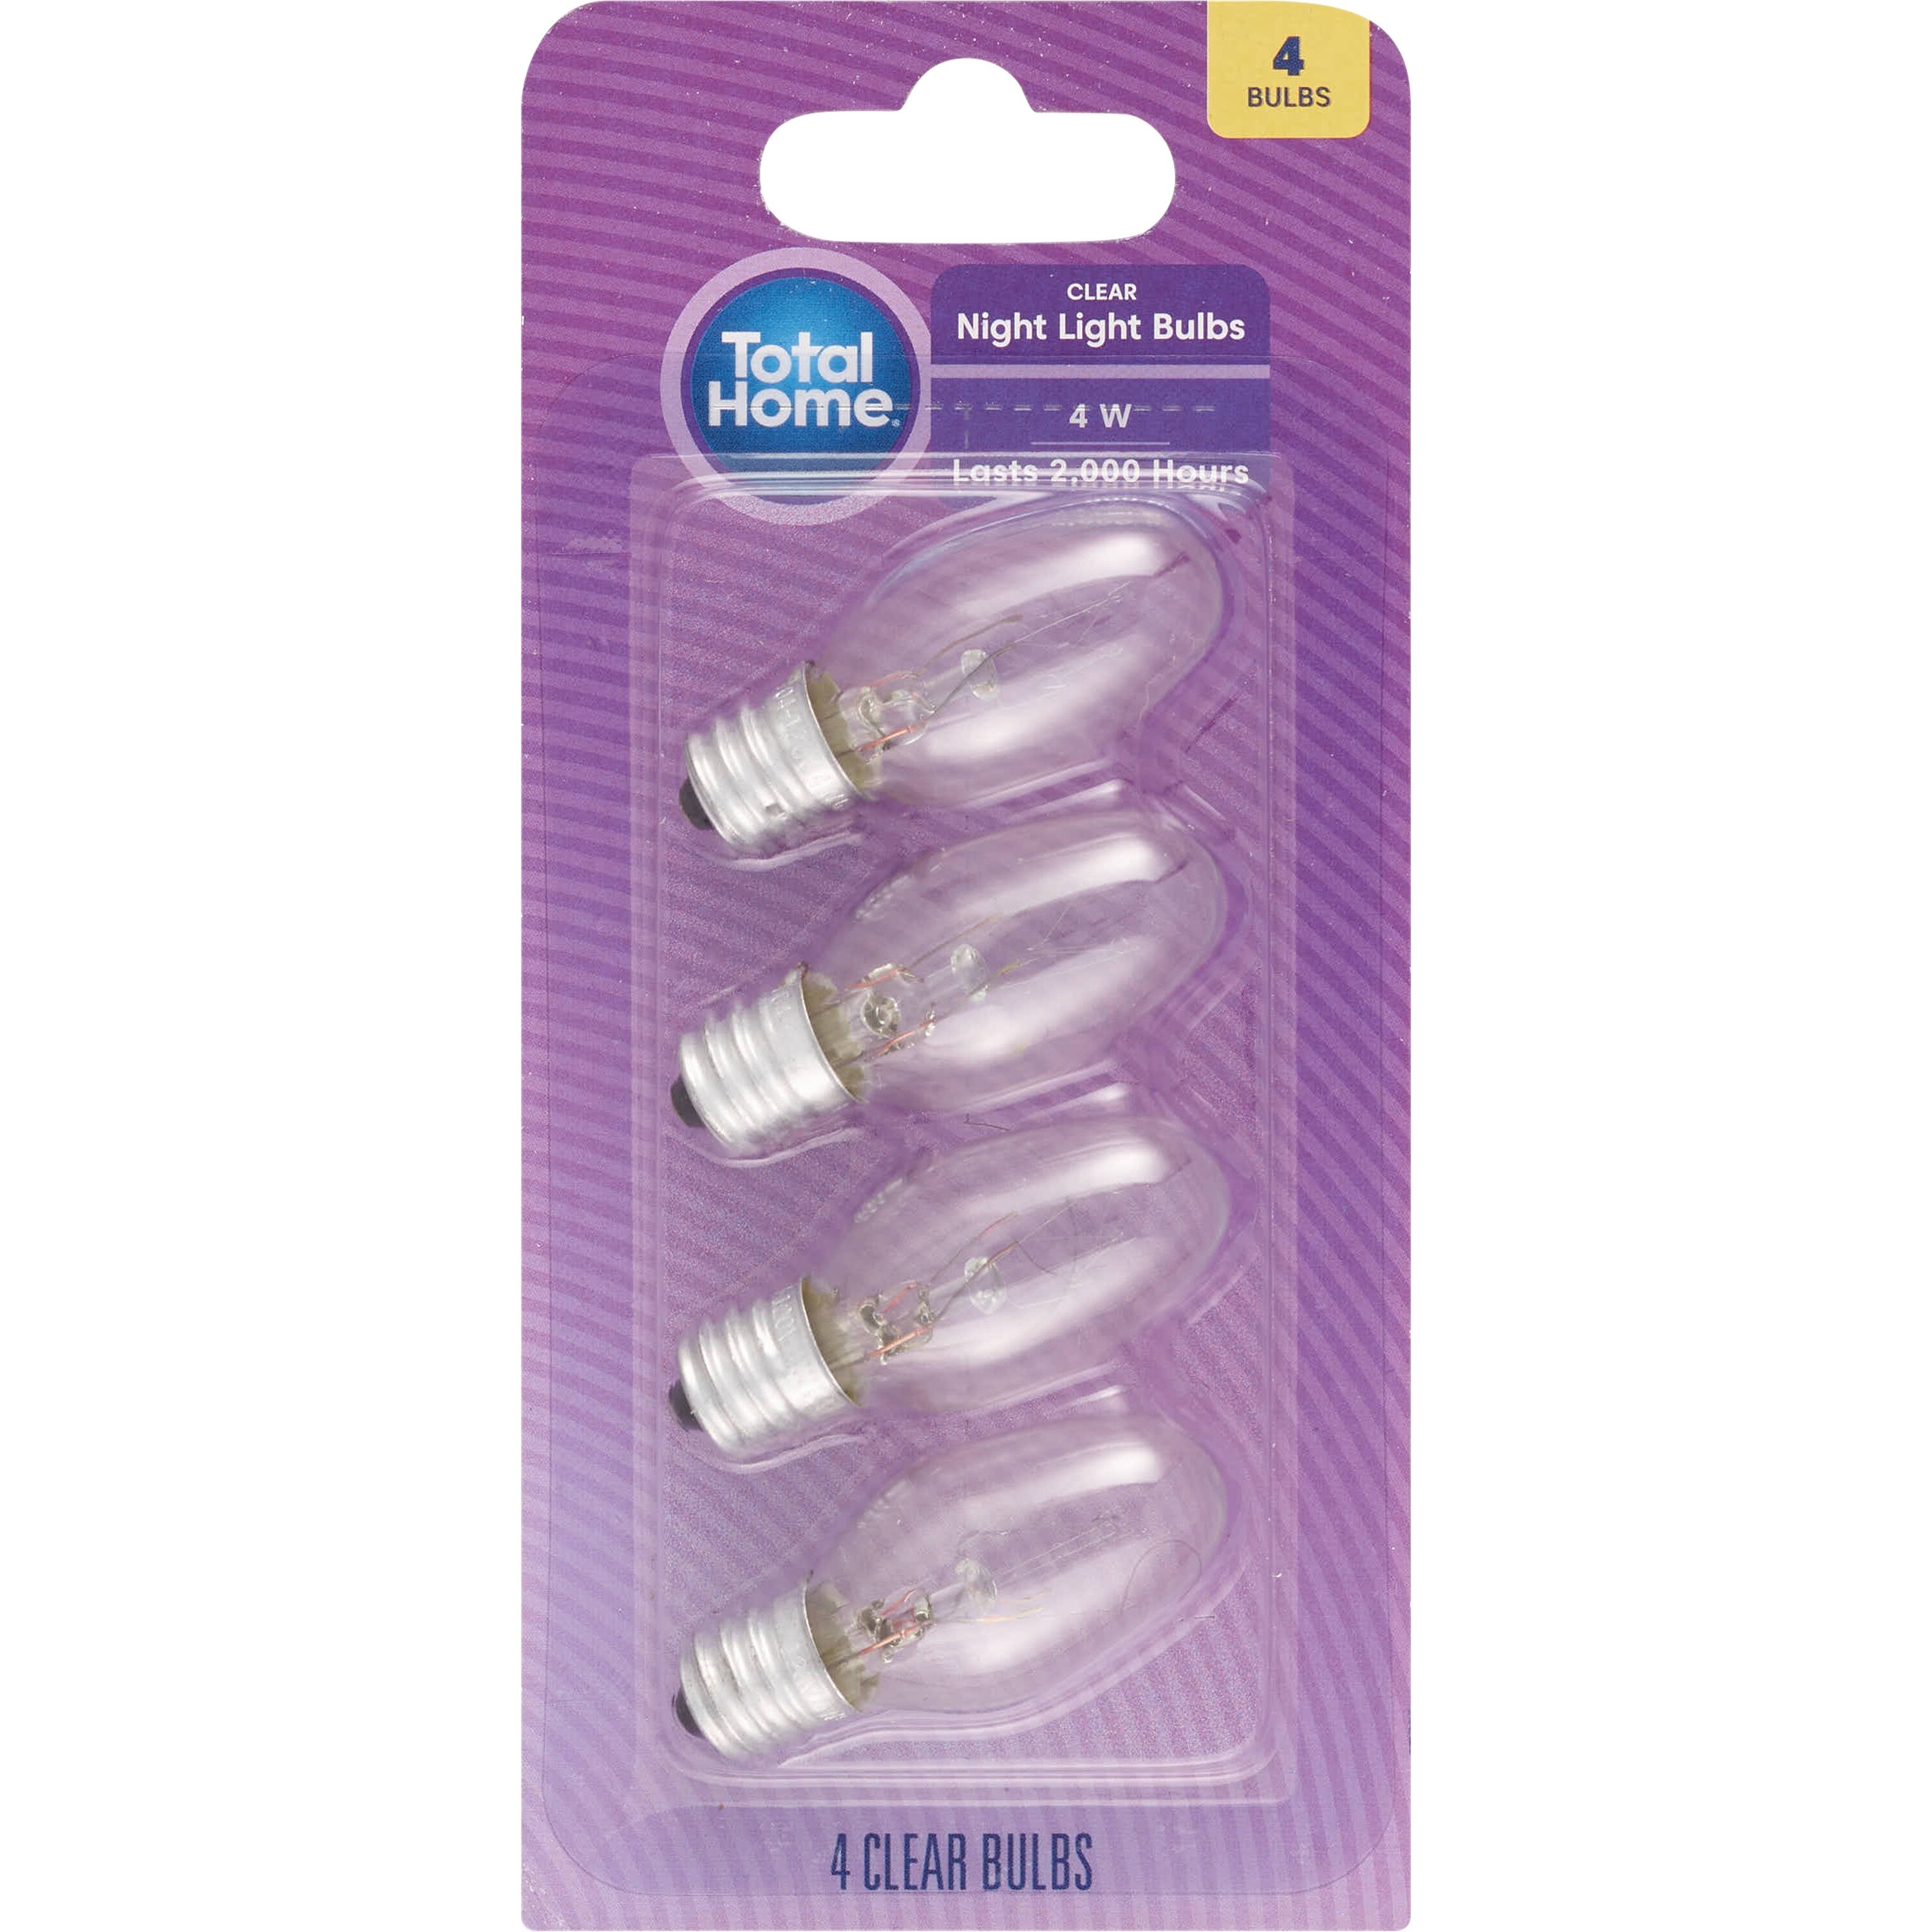 Total Home Clear Night Light Bulbs, 4W, 4 CT